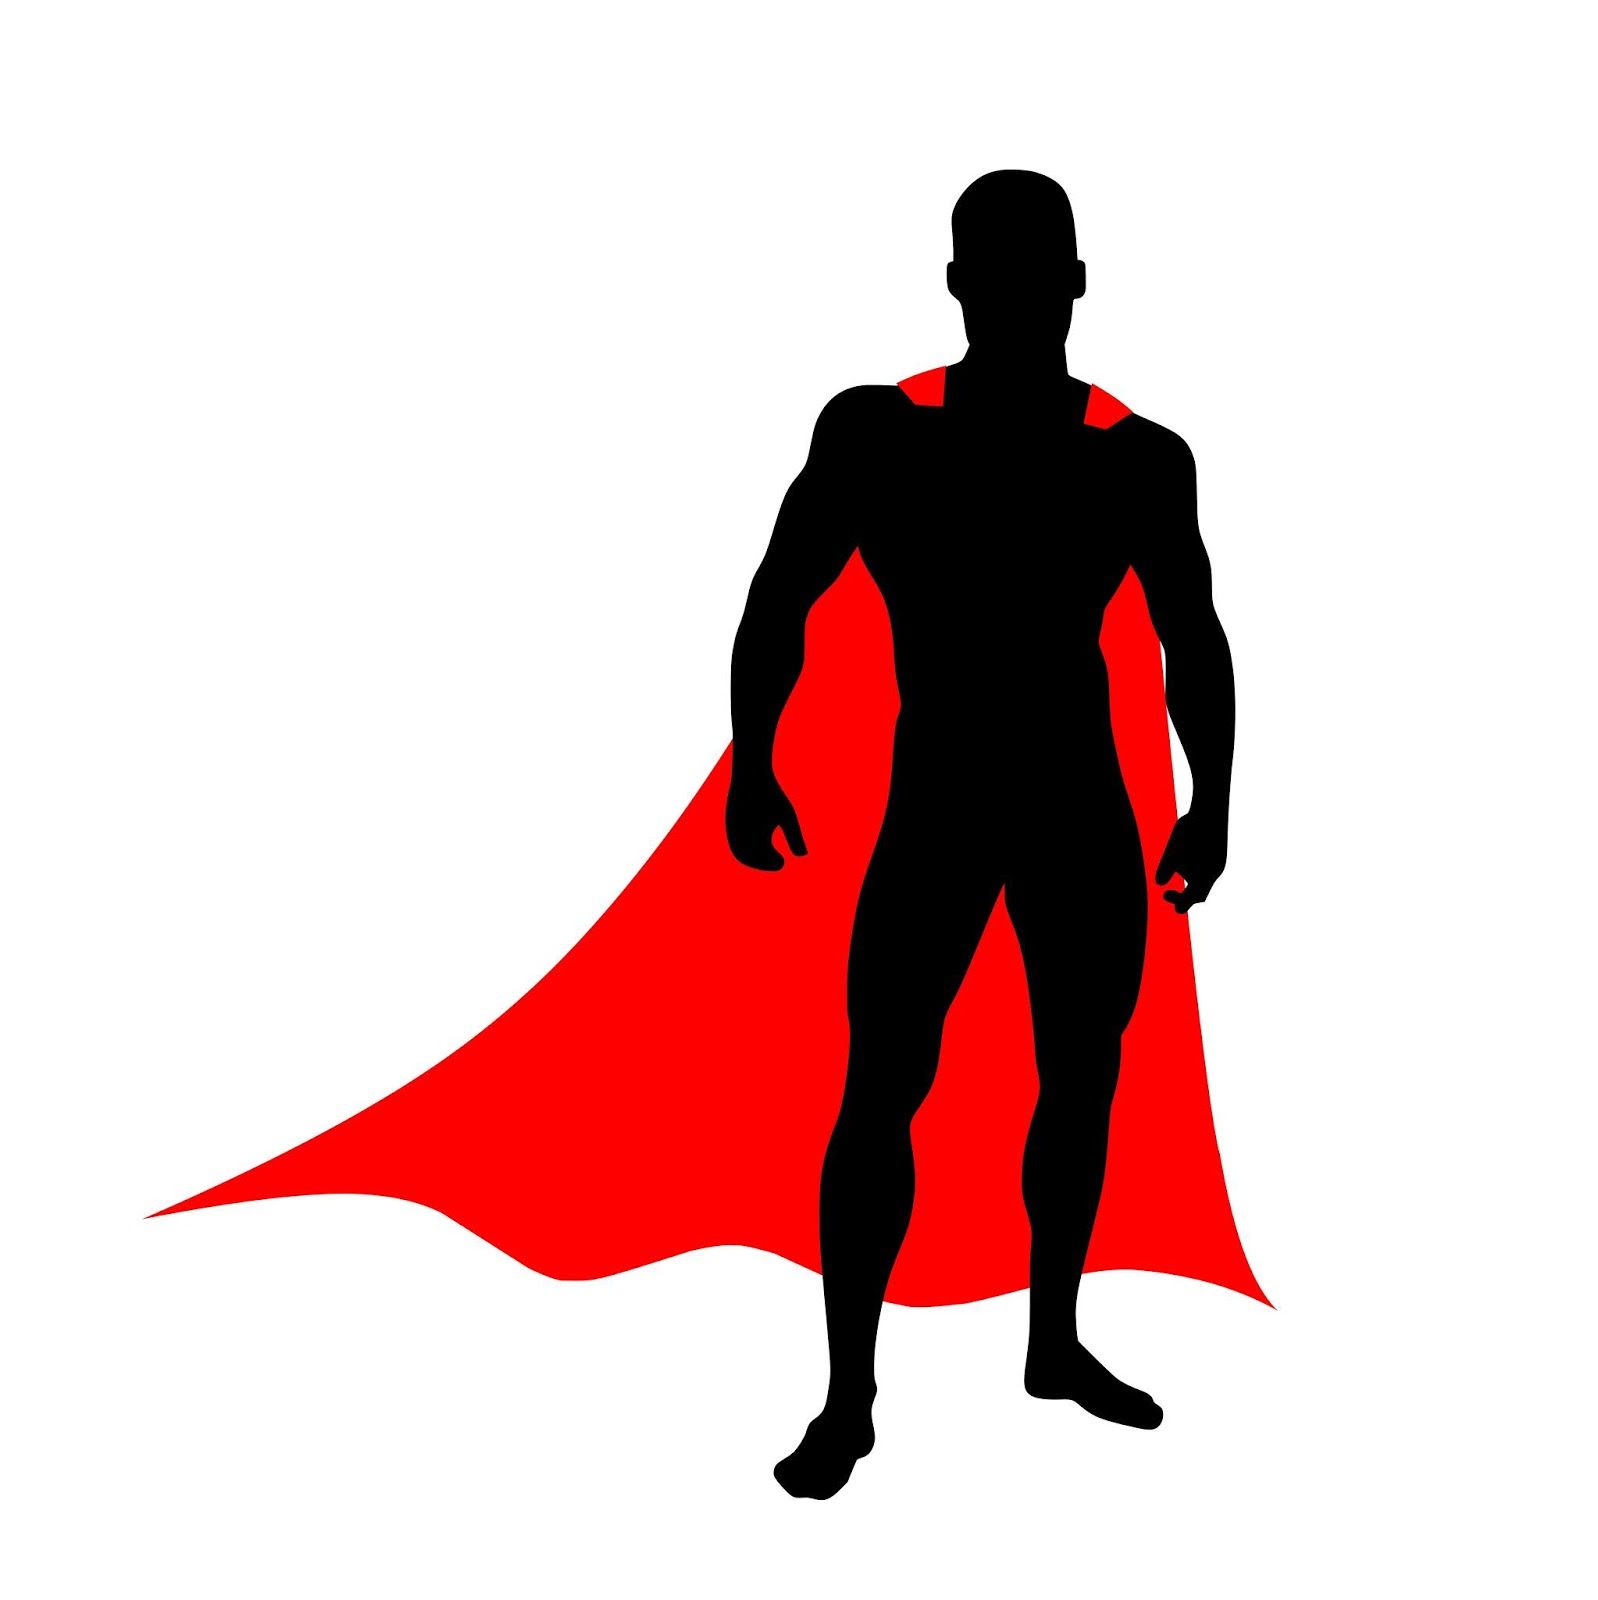 download free image and Illustrations, Illustration of super hero silhouette. Silhouette, Silhouette design, Illustration